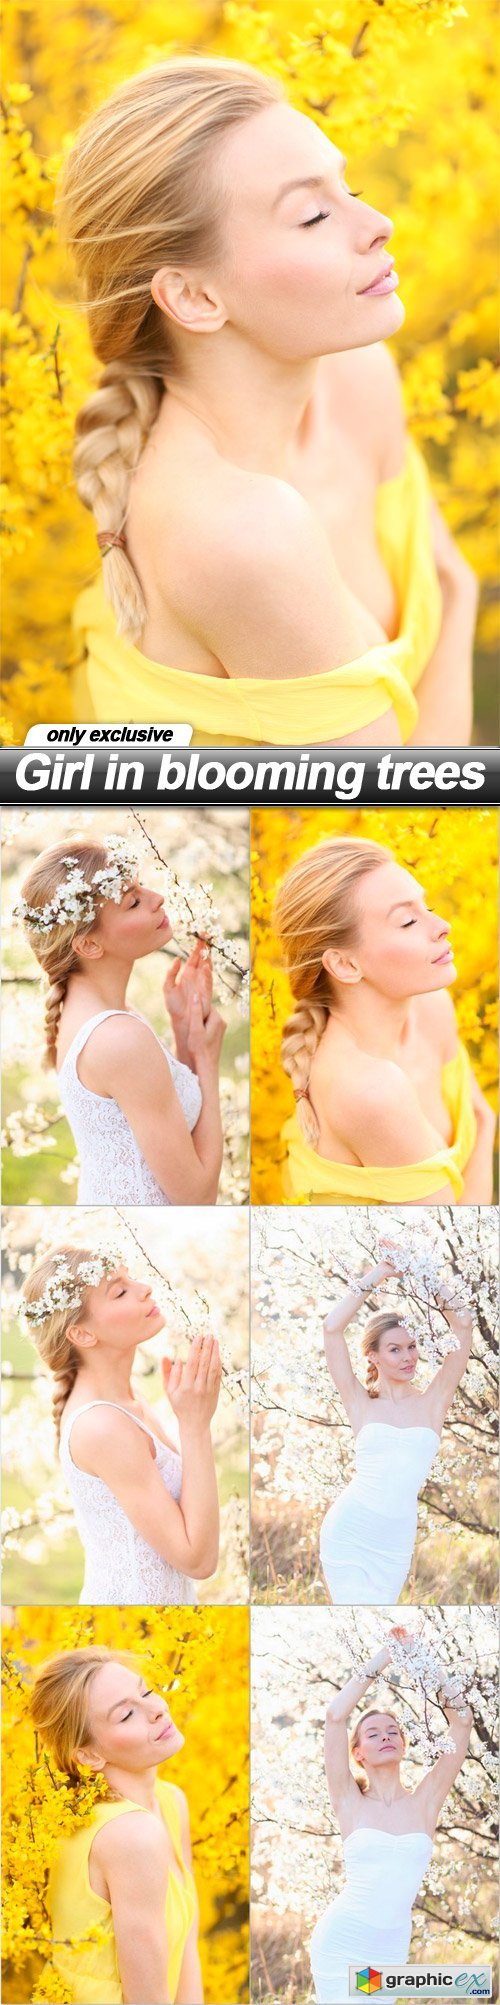 Girl in blooming trees - 6 UHQ JPEG